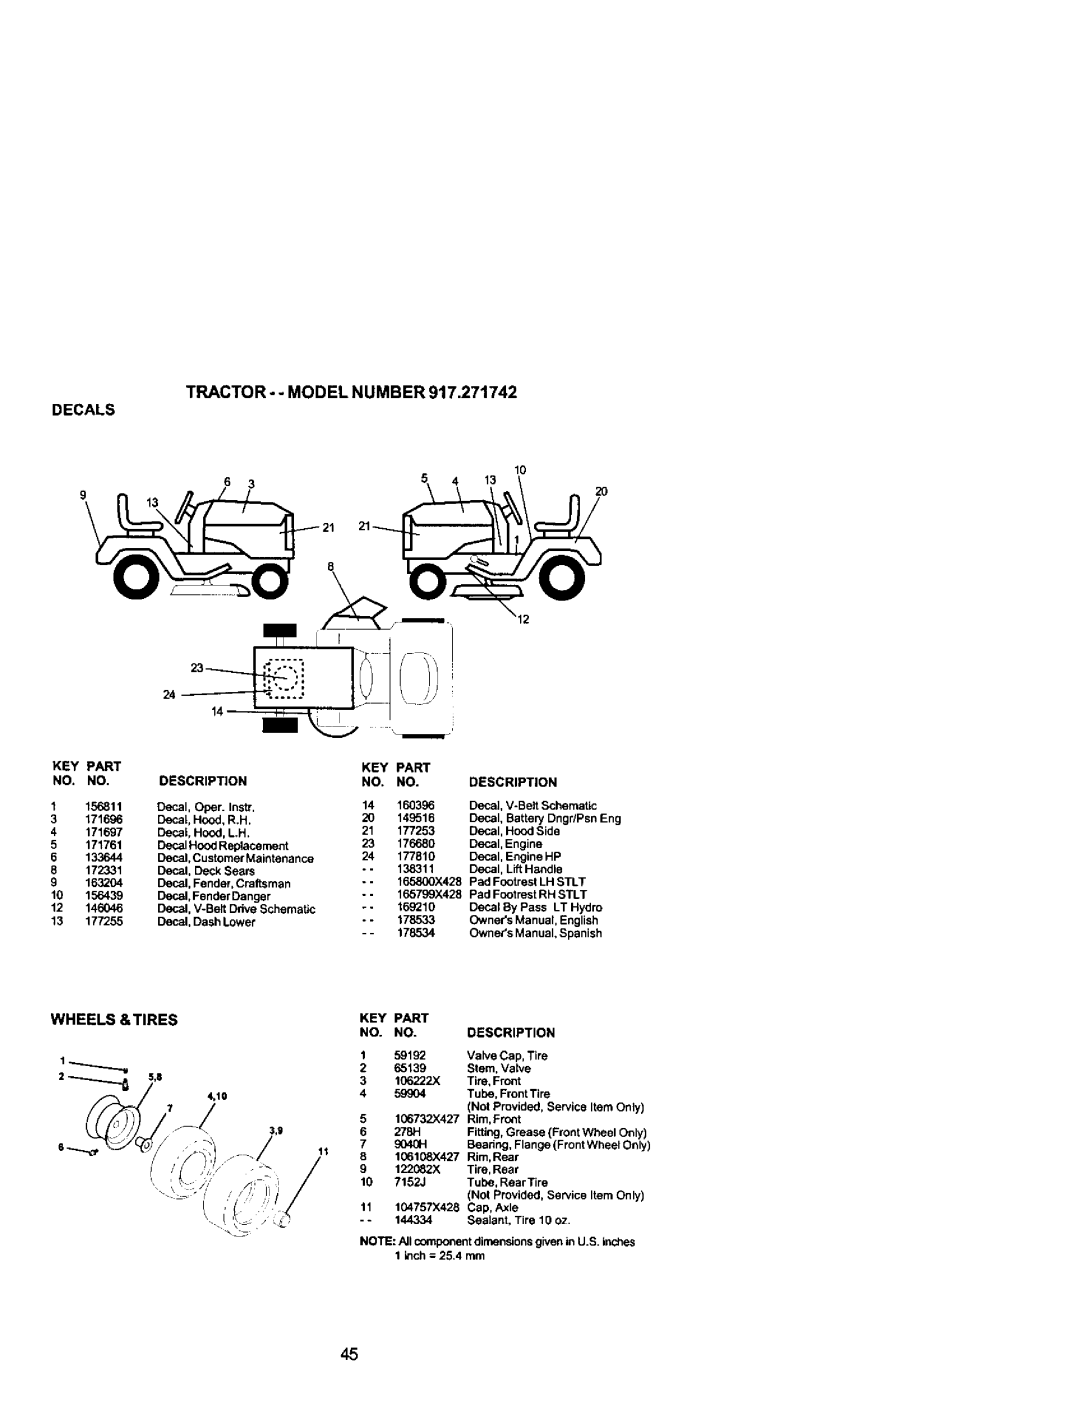 Craftsman 917.271742 owner manual Tractor - - Model Number, Decals, Wheels &Tires 